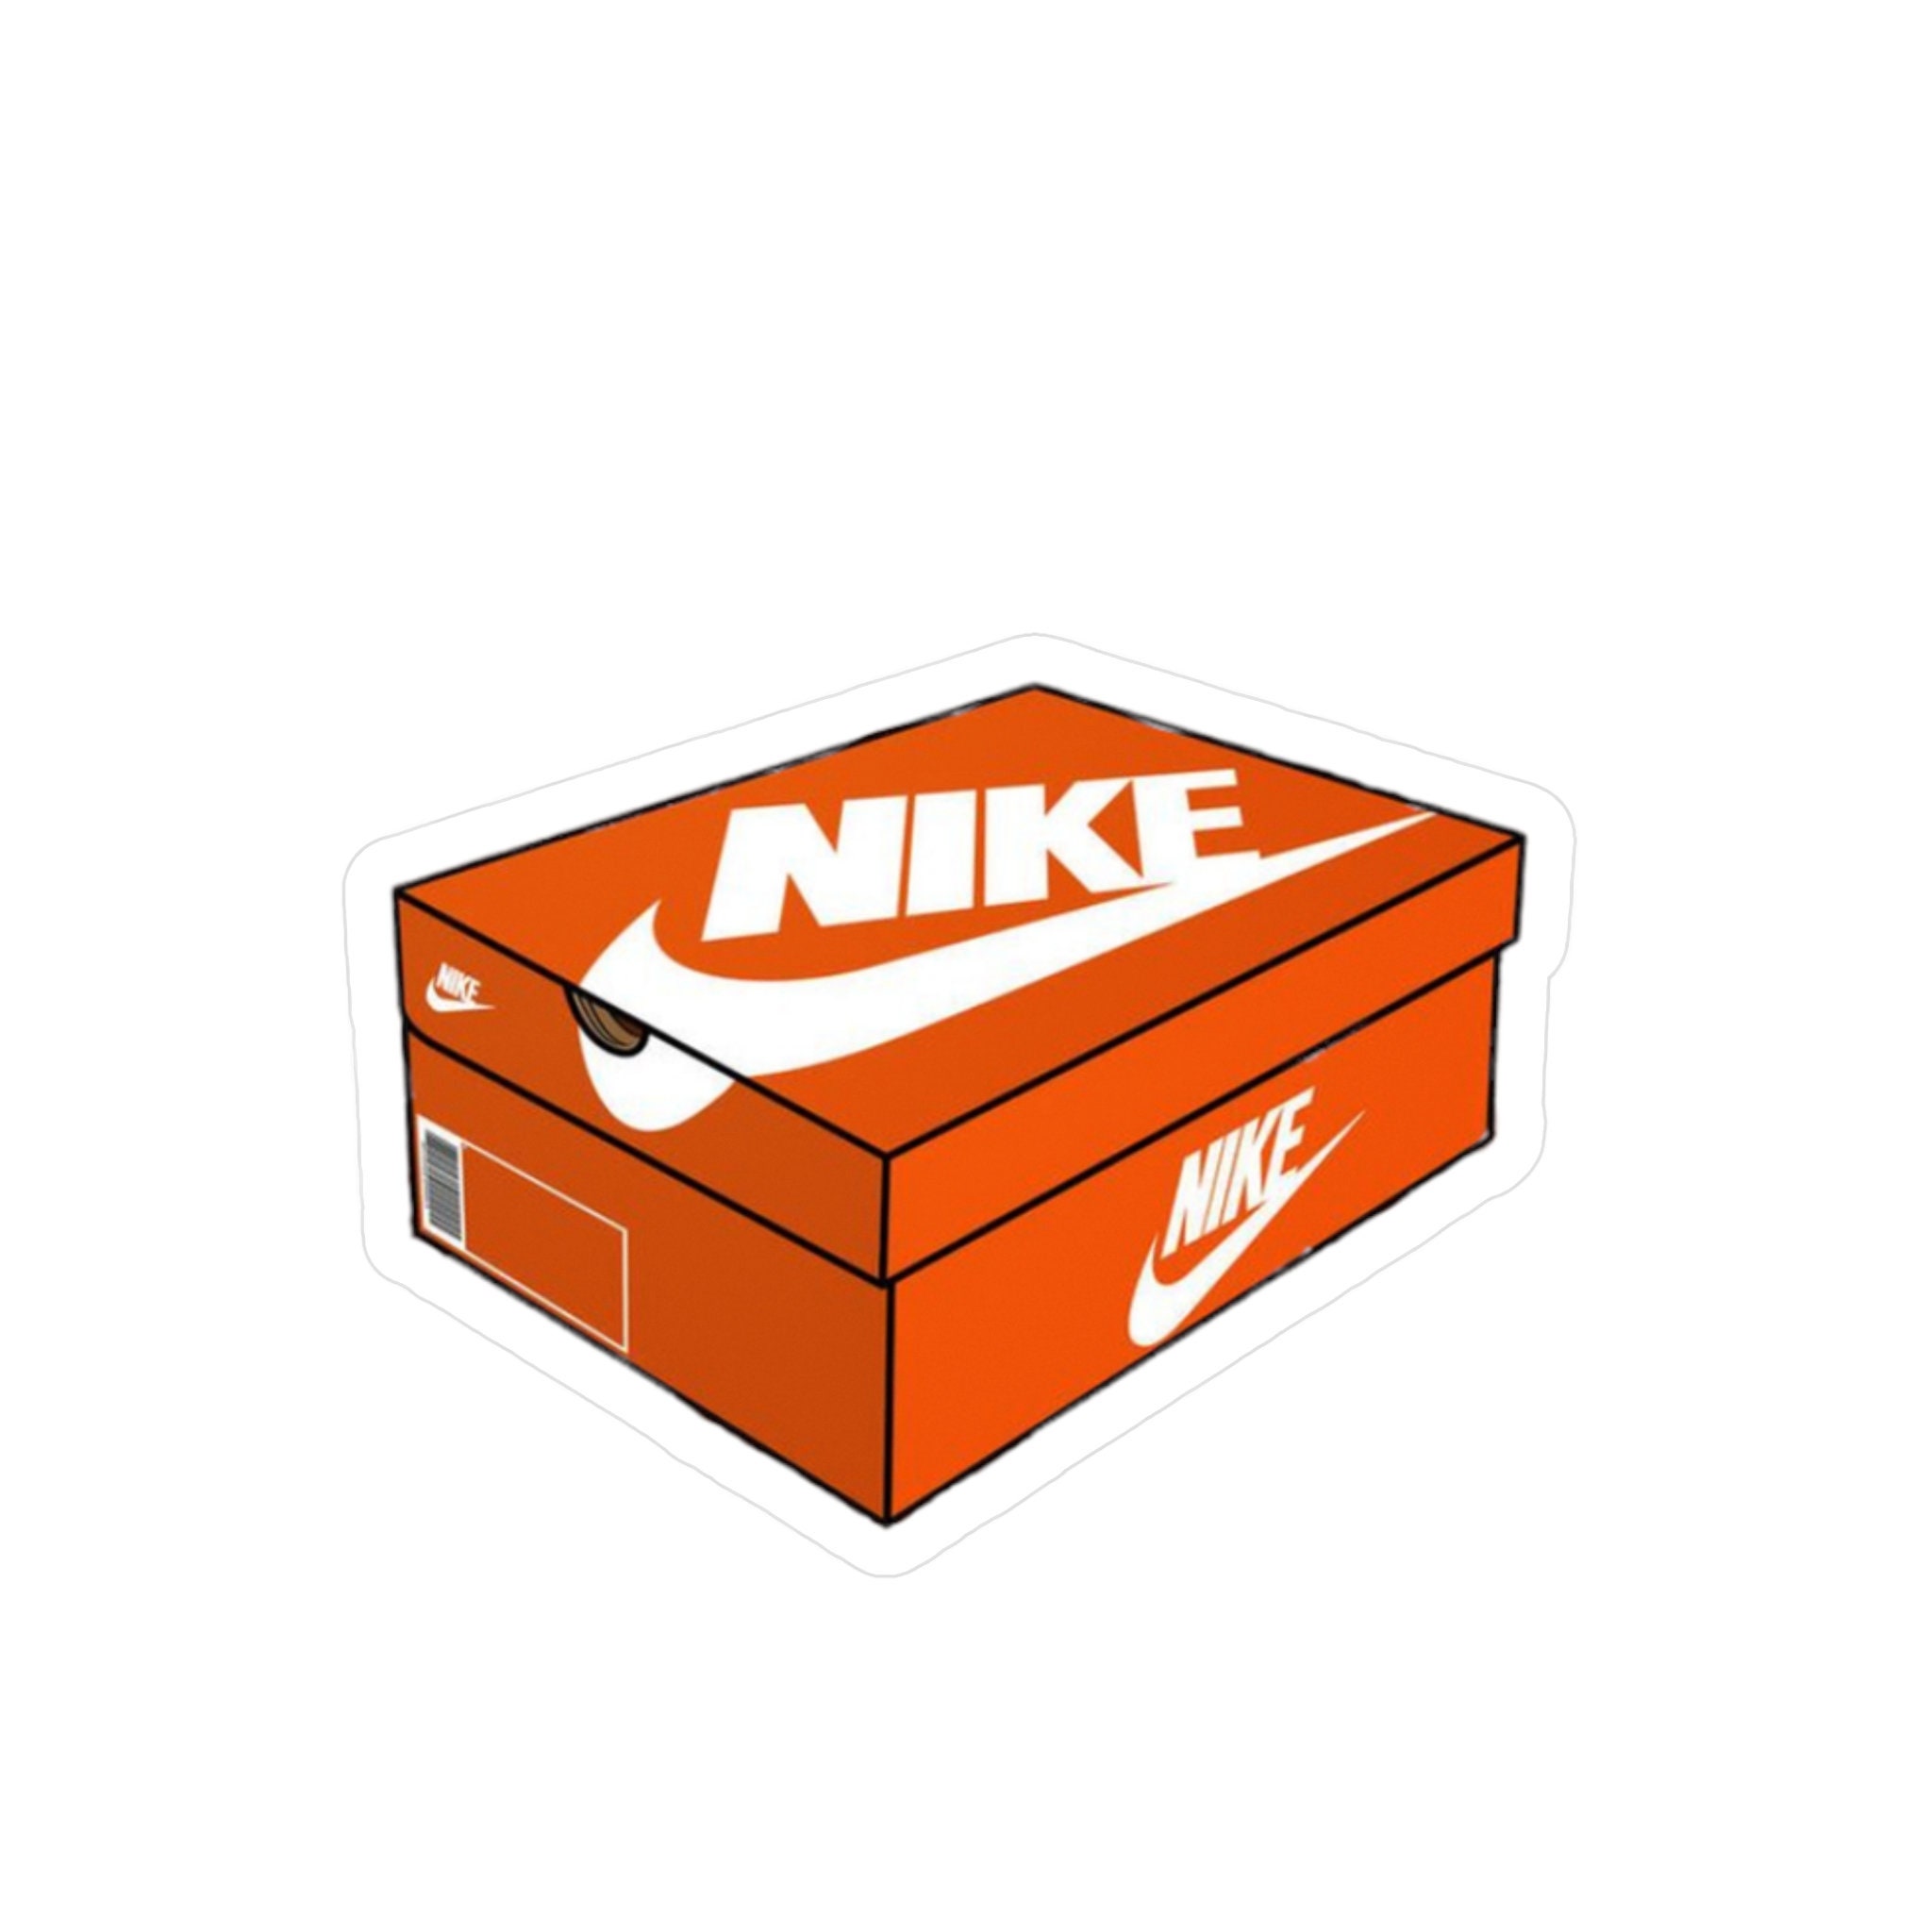 Nike Shoe Box Sticker 